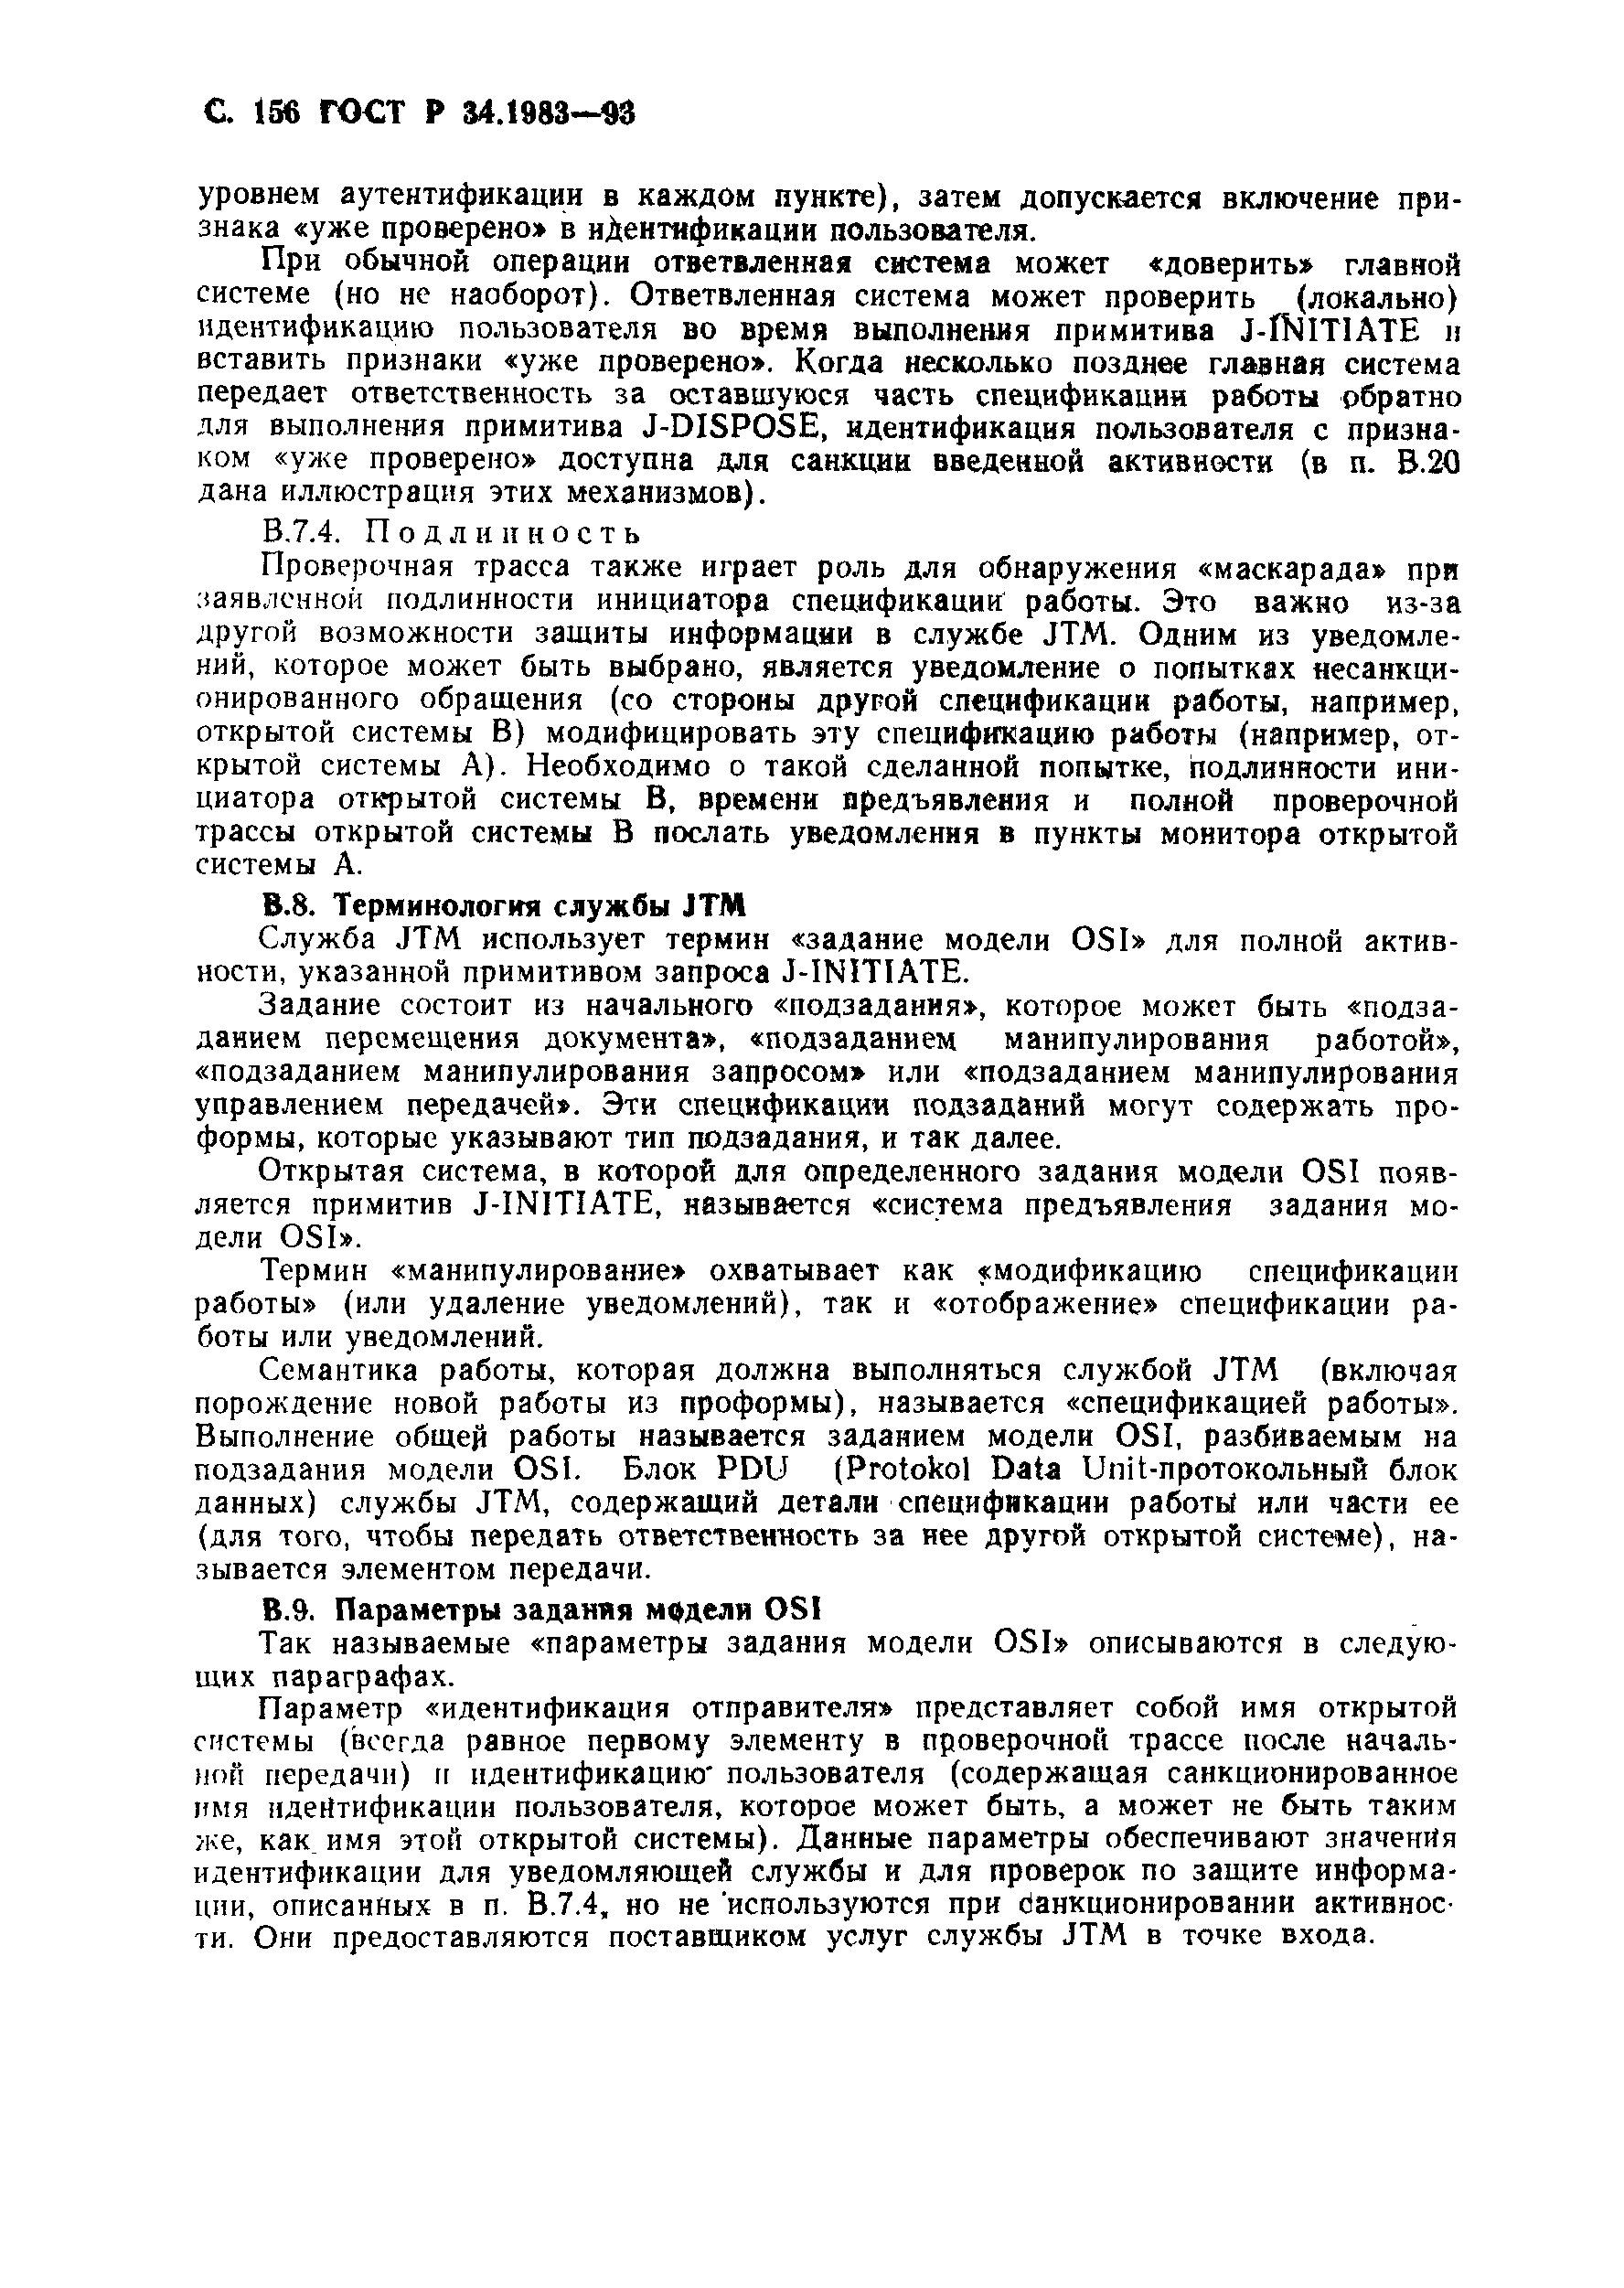 ГОСТ Р 34.1983-93. Страница 157